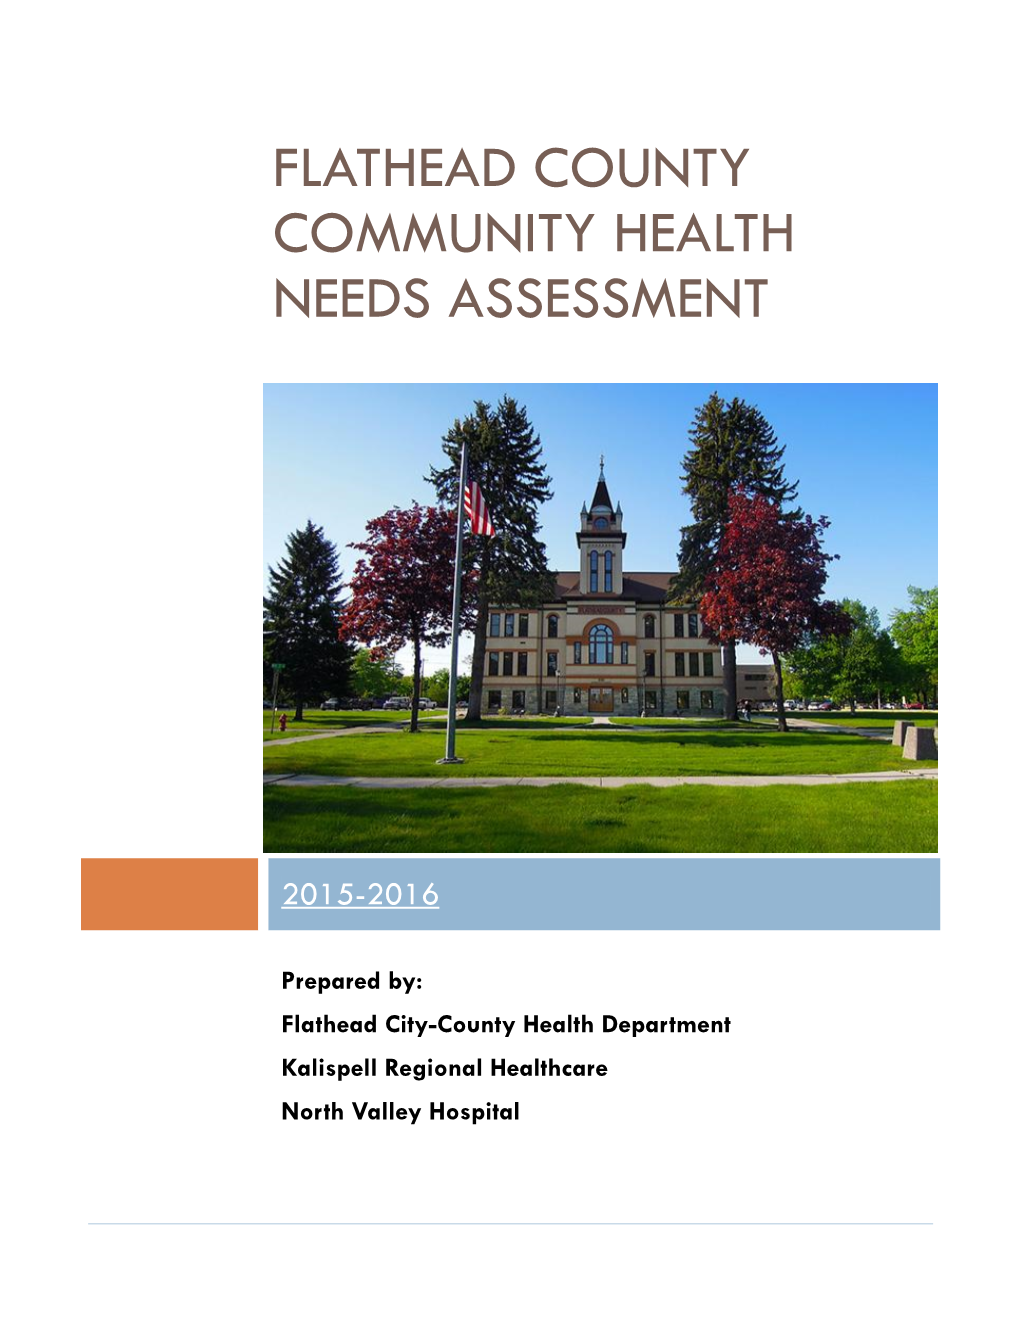 Flathead County Community Health Needs Assessment